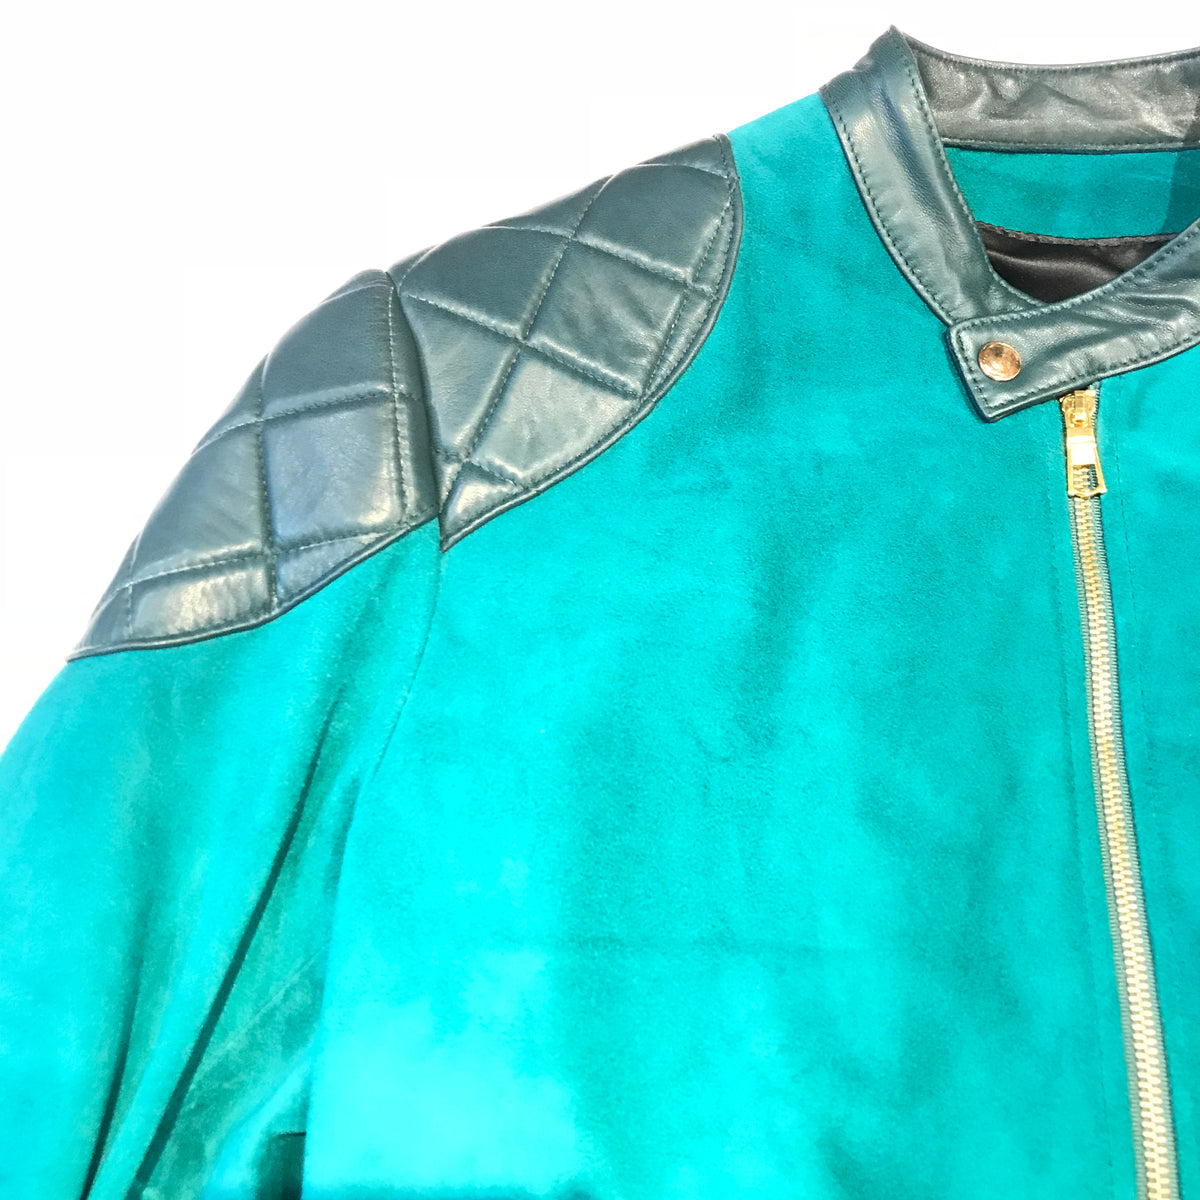 Kashani Turquoise Suede Chinese Collar Biker Jacket - Dudes Boutique